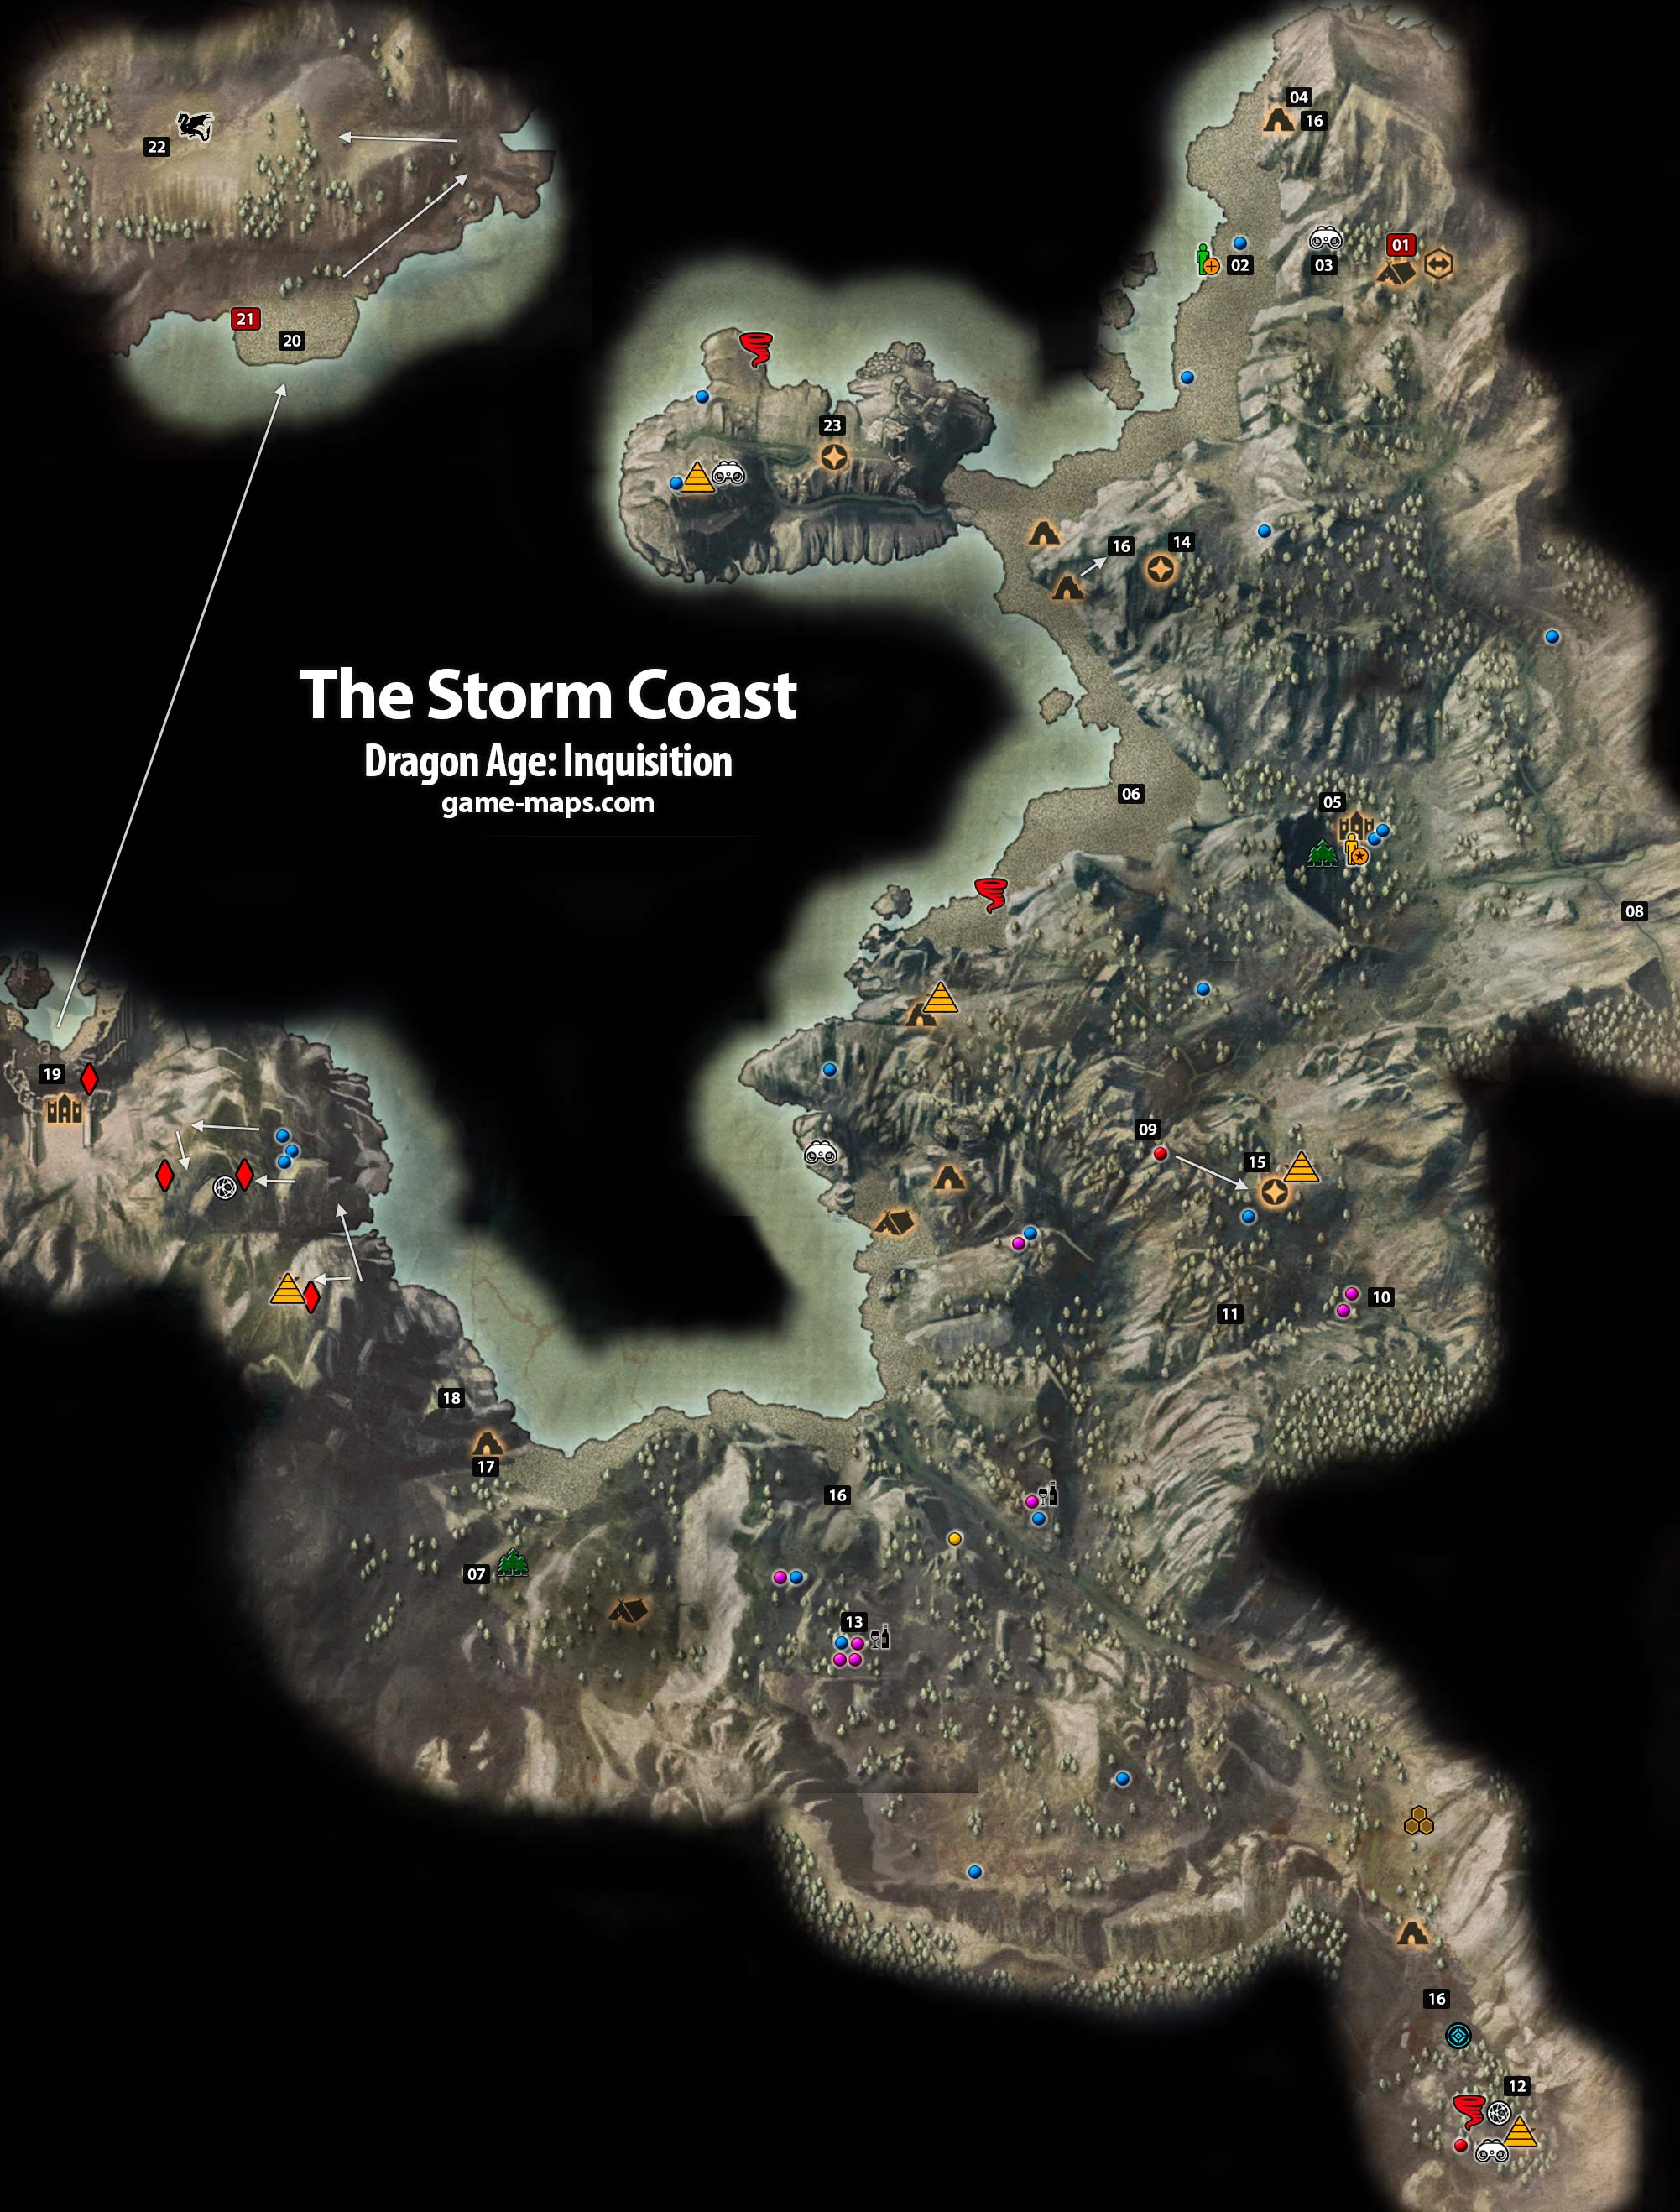 The Storm Coast Dragon Age: Inquisition